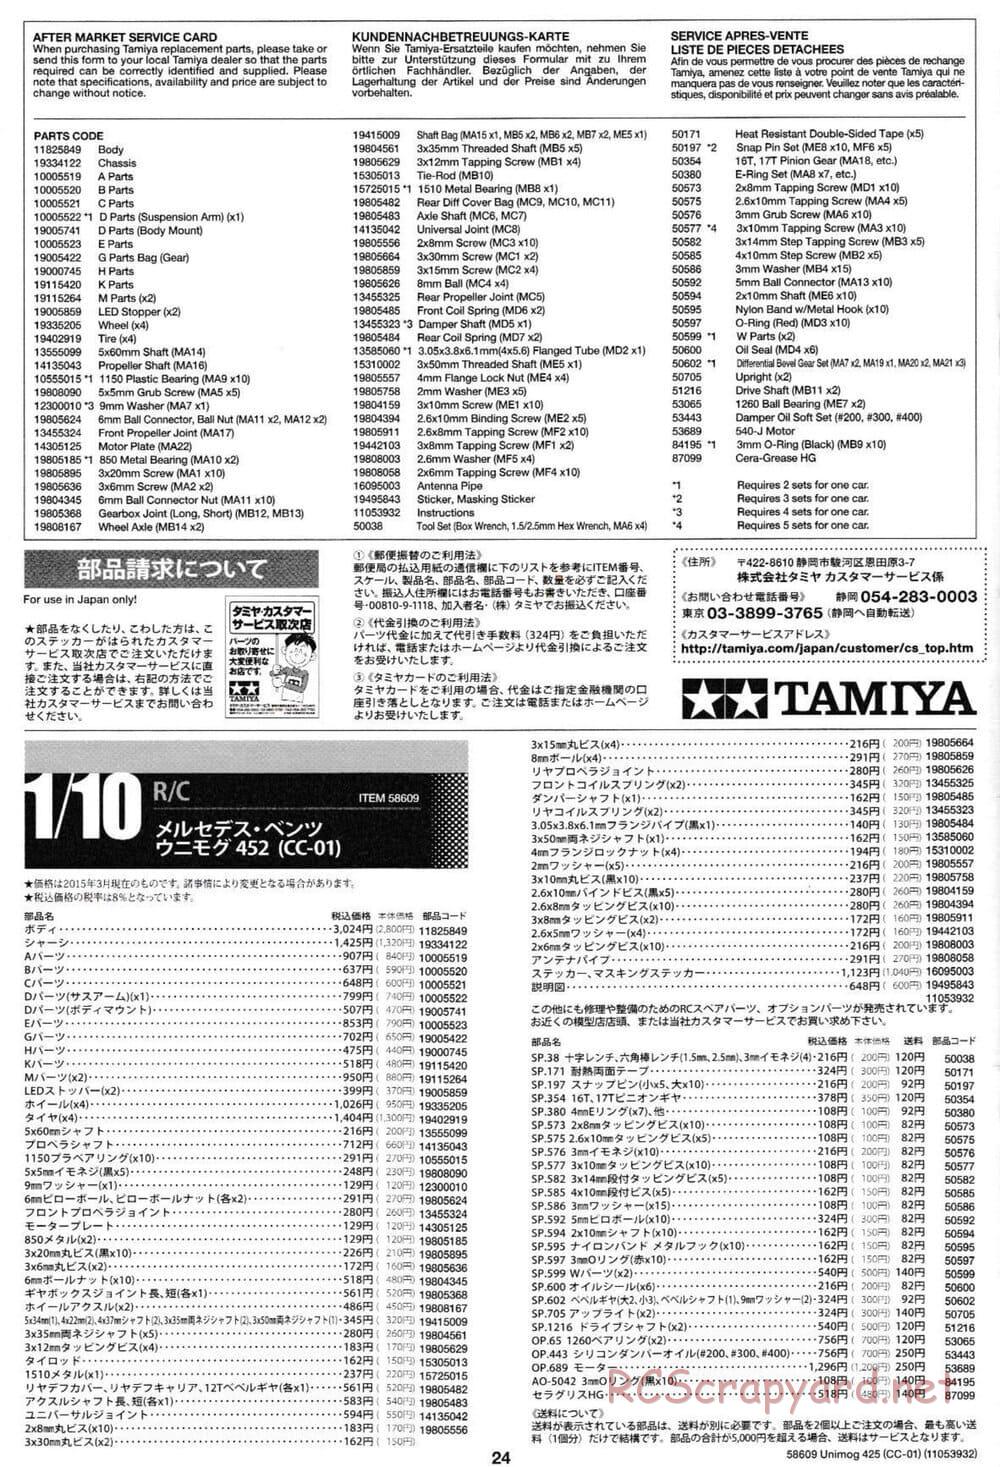 Tamiya - Mercedes-Benz Unimog 425 - CC-01 Chassis - Manual - Page 24